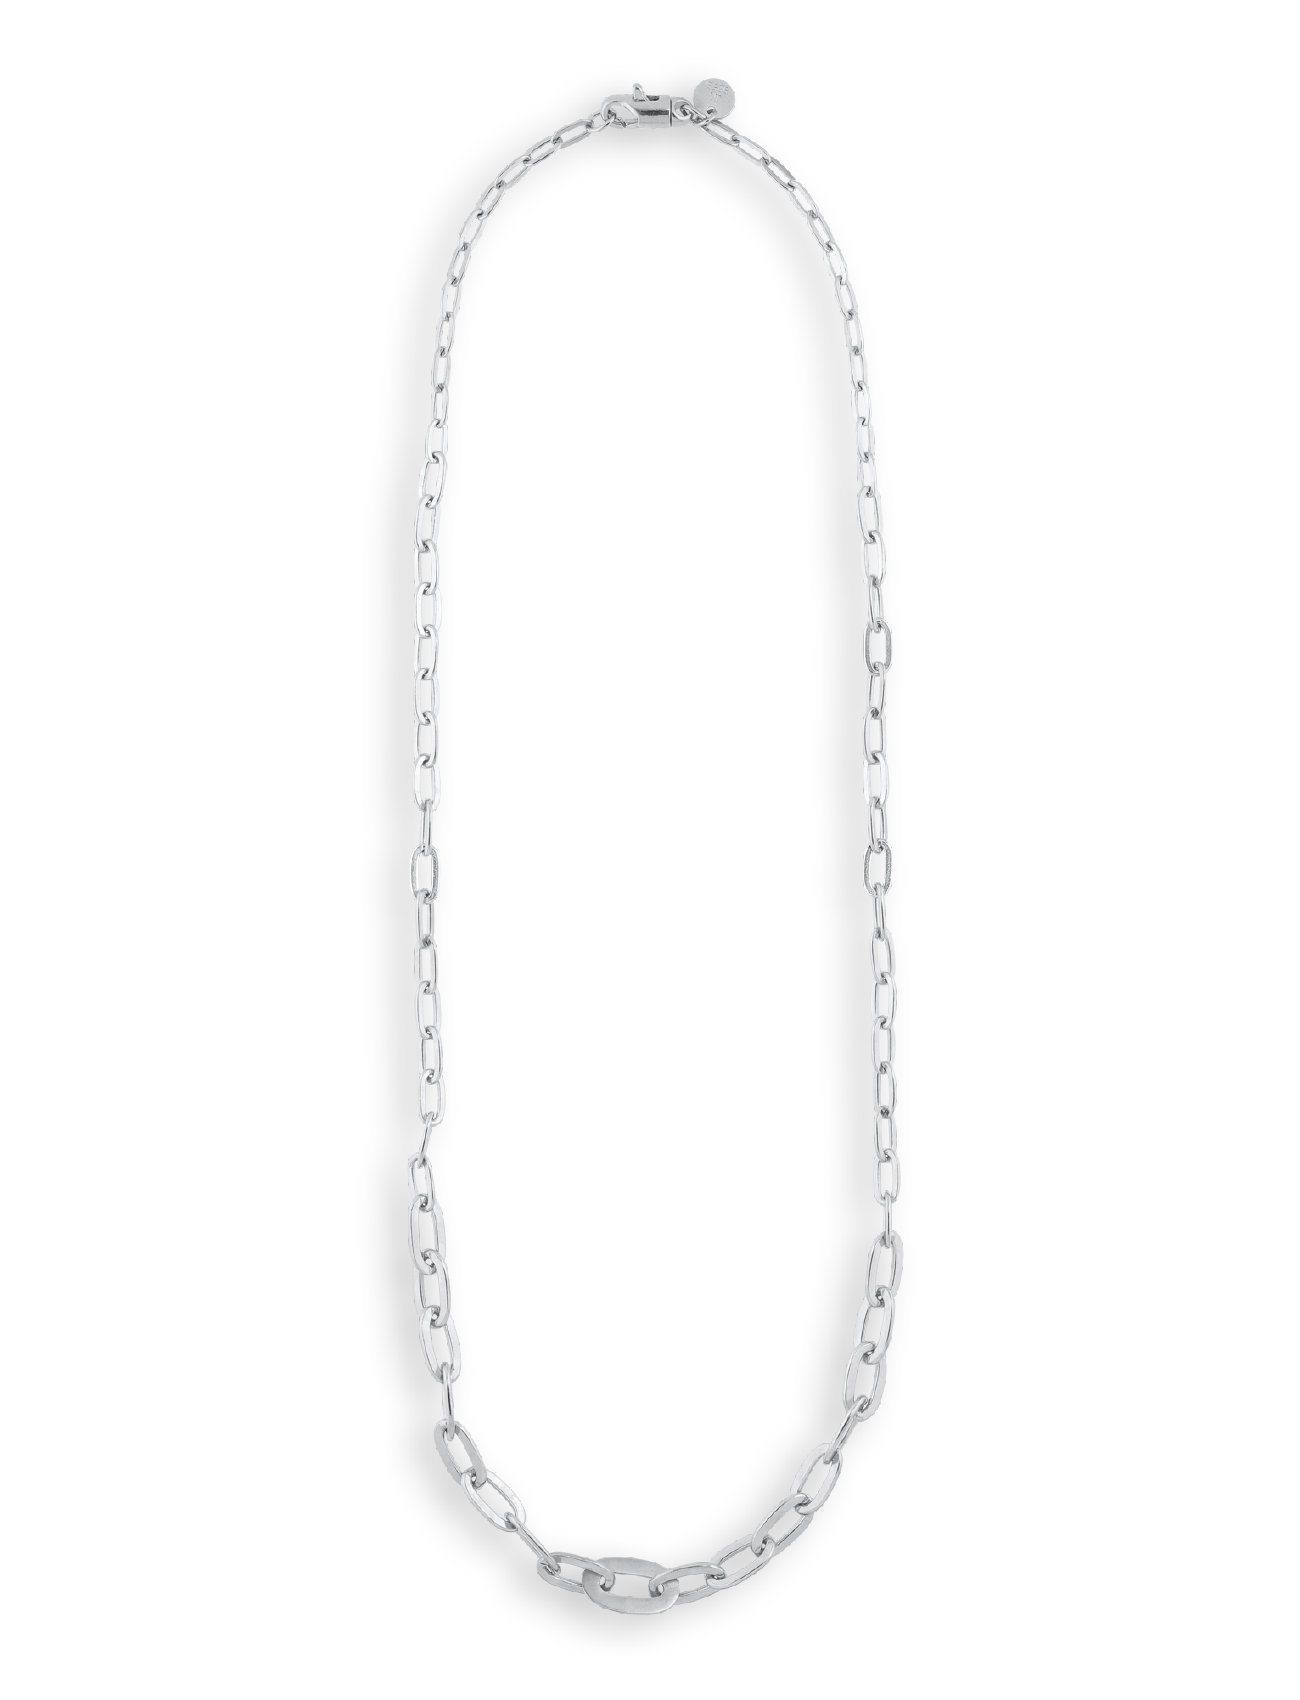 Row Necklace Accessories Jewellery Necklaces Chain Necklaces Hopea Jane Koenig